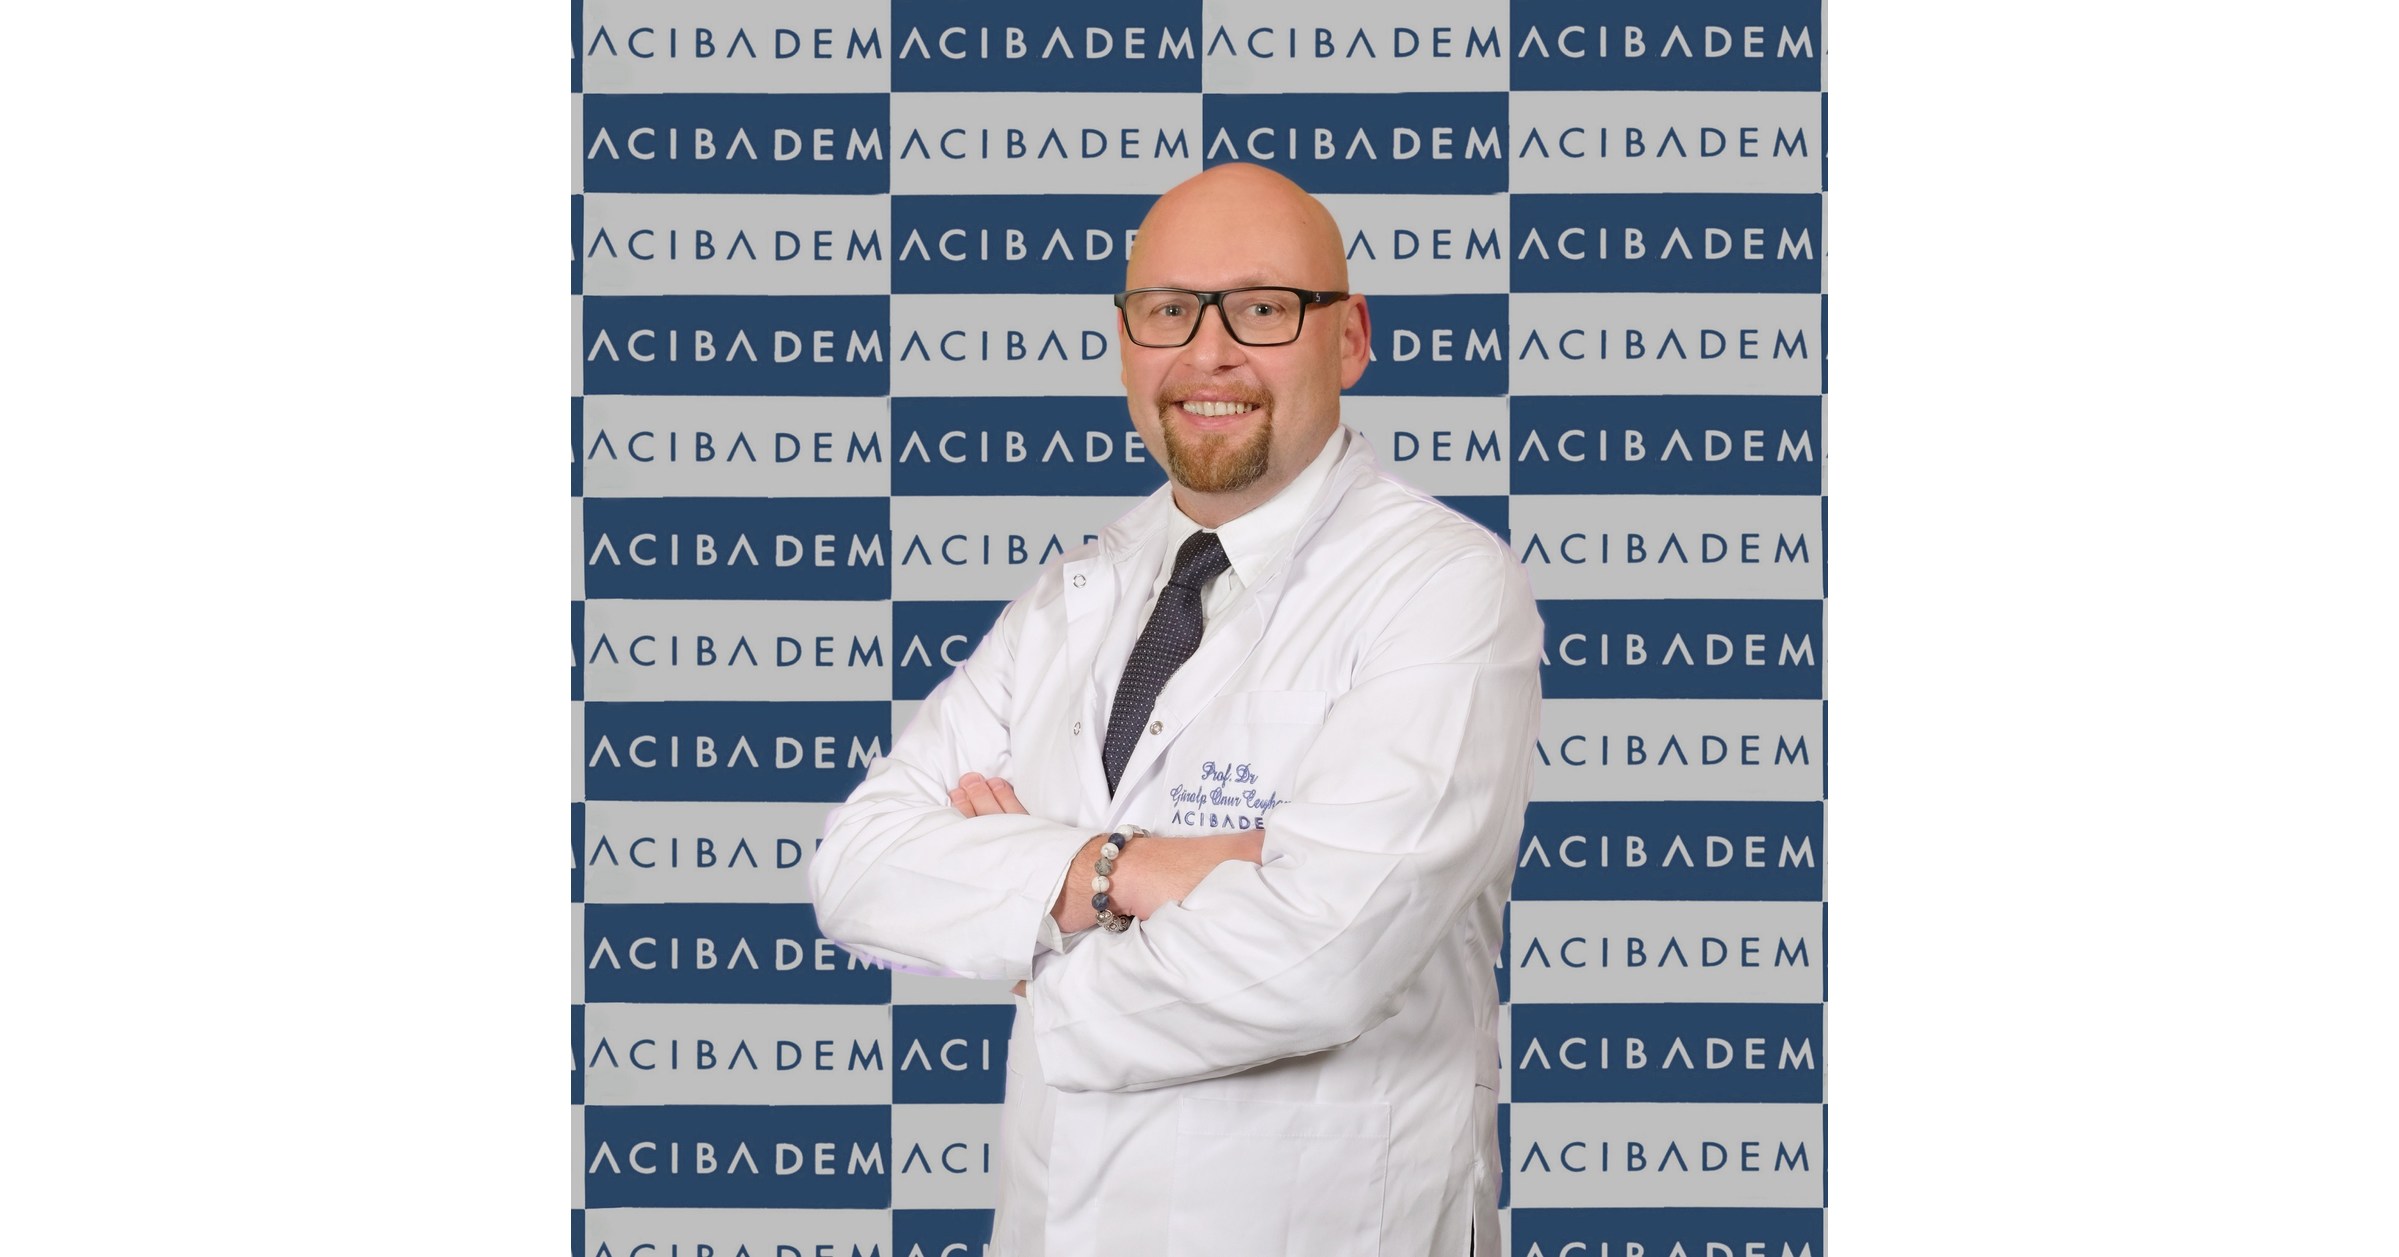 Cancer Treatment in Turkey (Oncology) - ACIBADEM